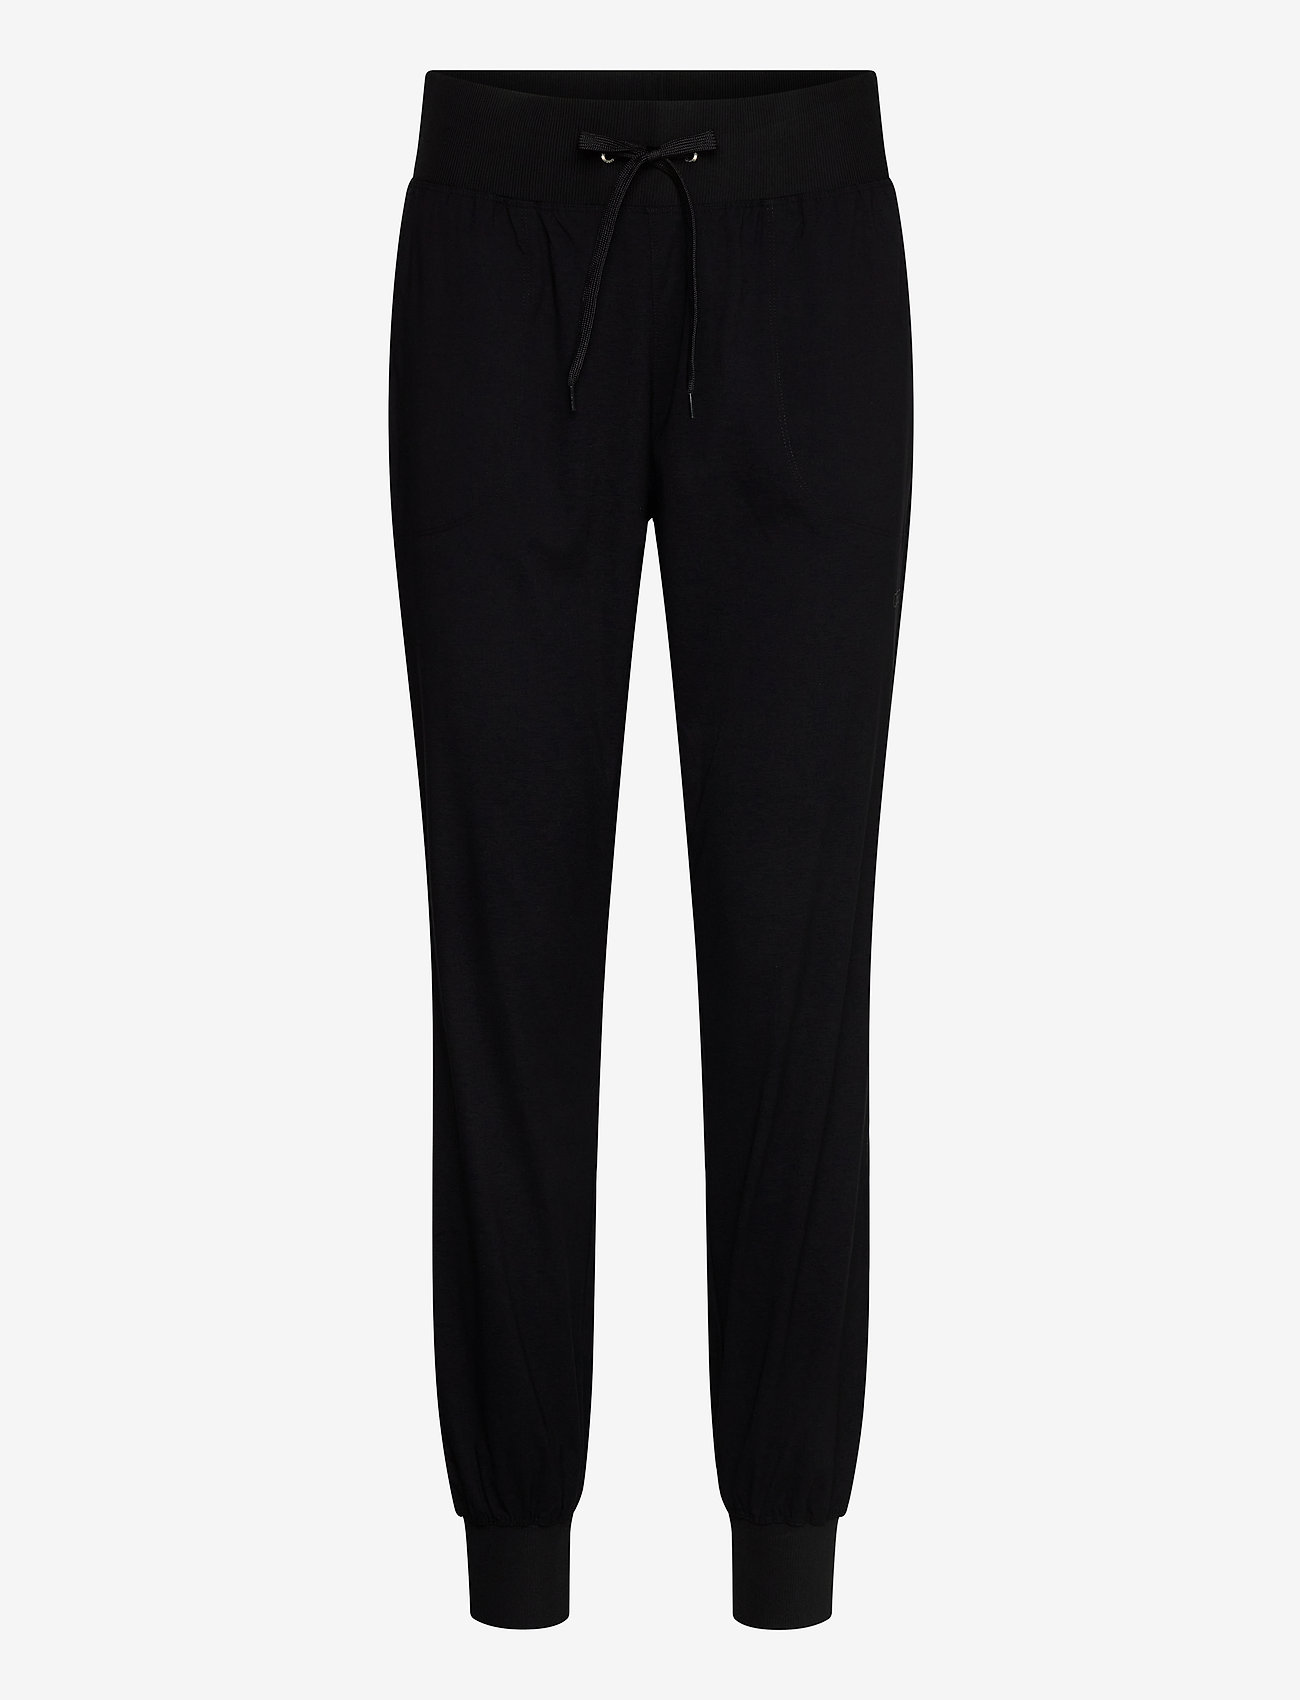 Casall - Comfort Woven Pants - sporta bikses - black - 0